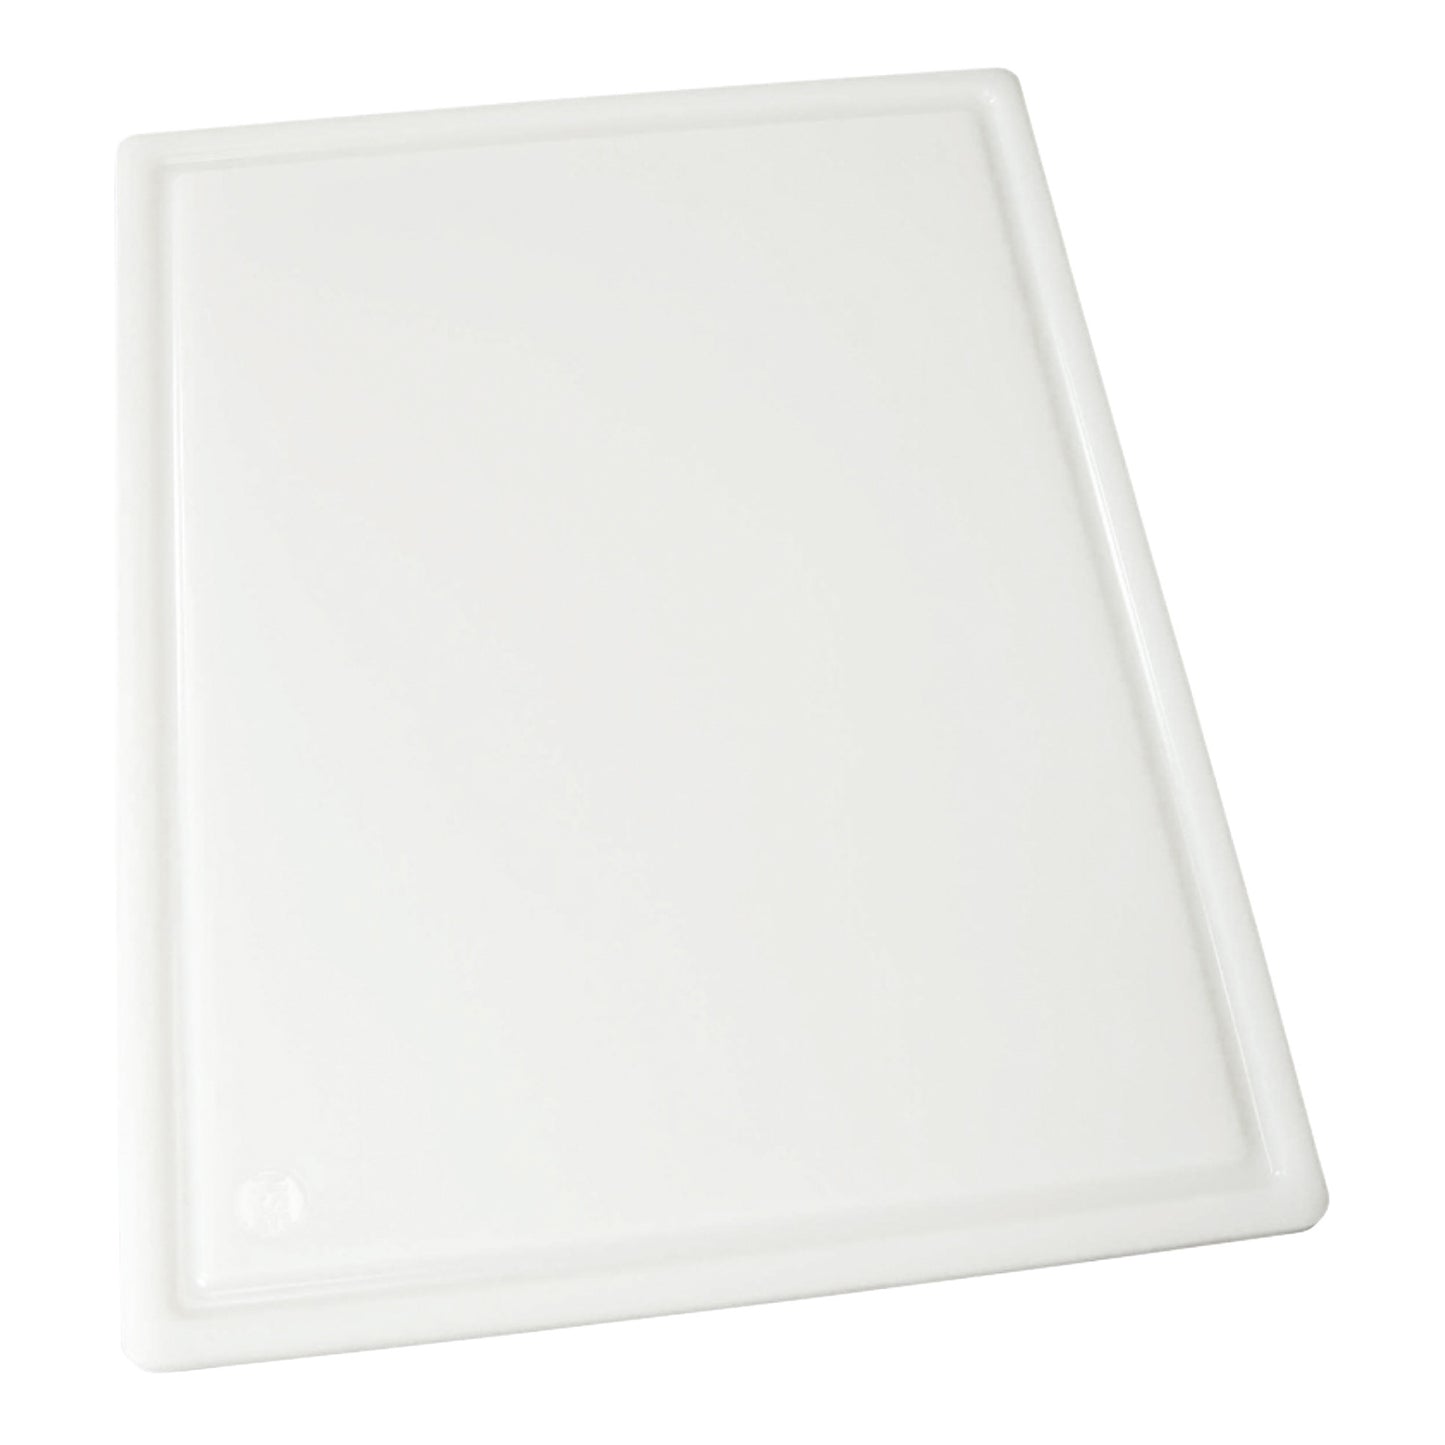 CBI-1218 - White Cutting Board with Channel - 12 x 18 x 1/2